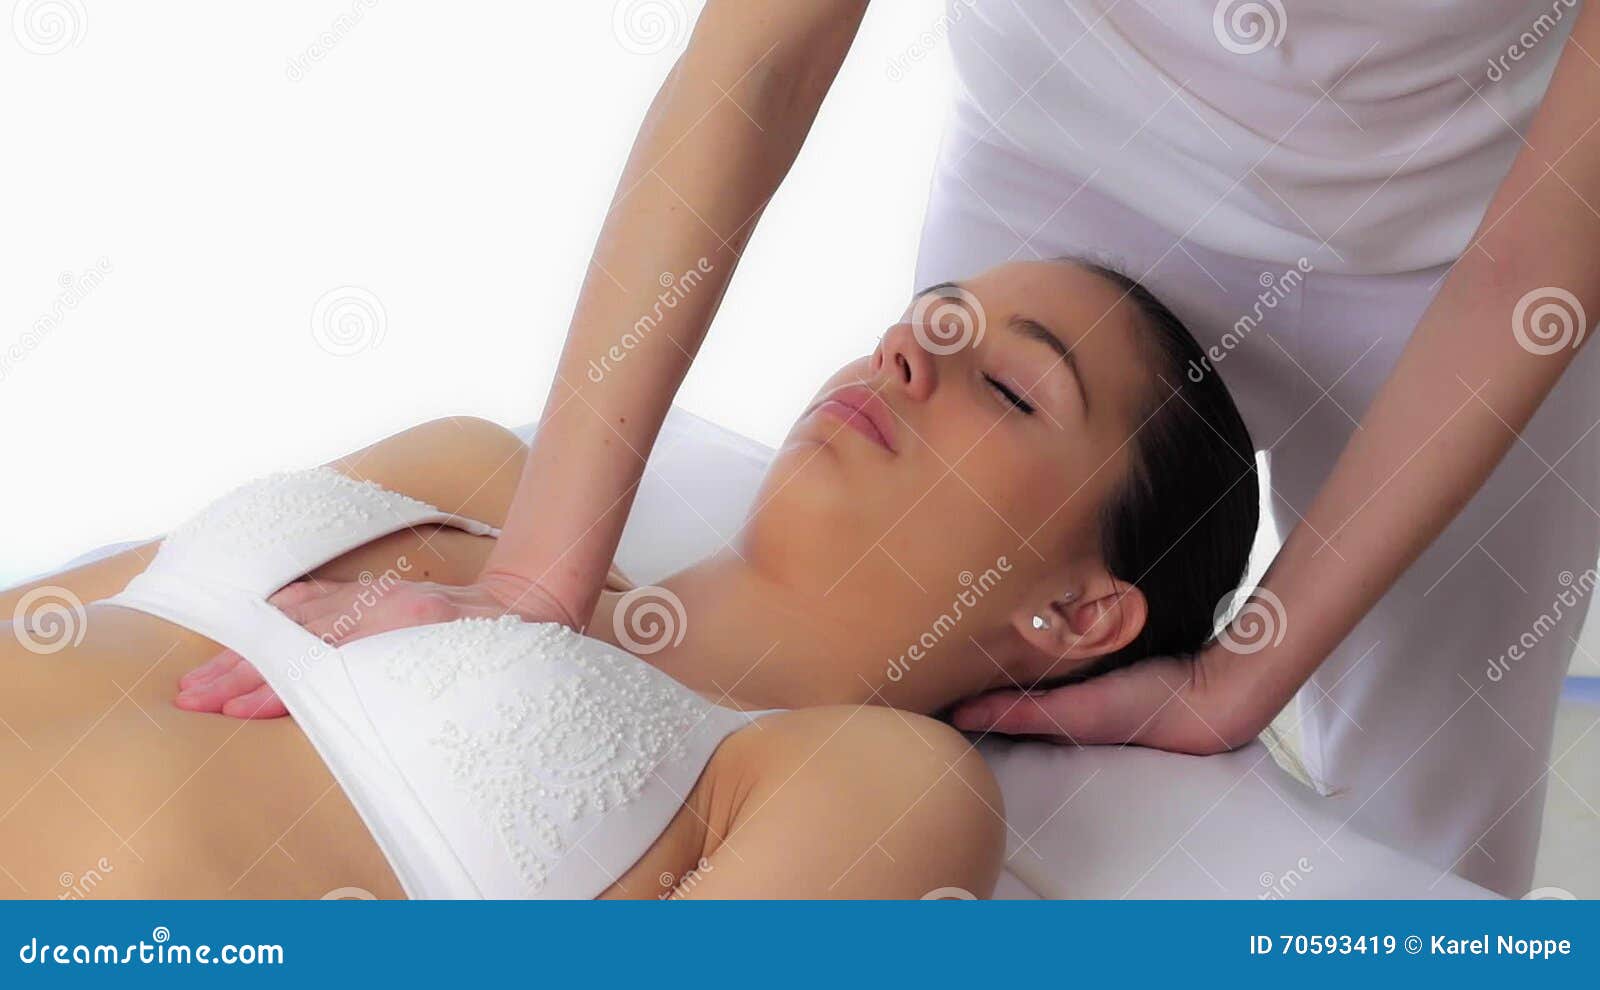 техника массажа грудью фото 84